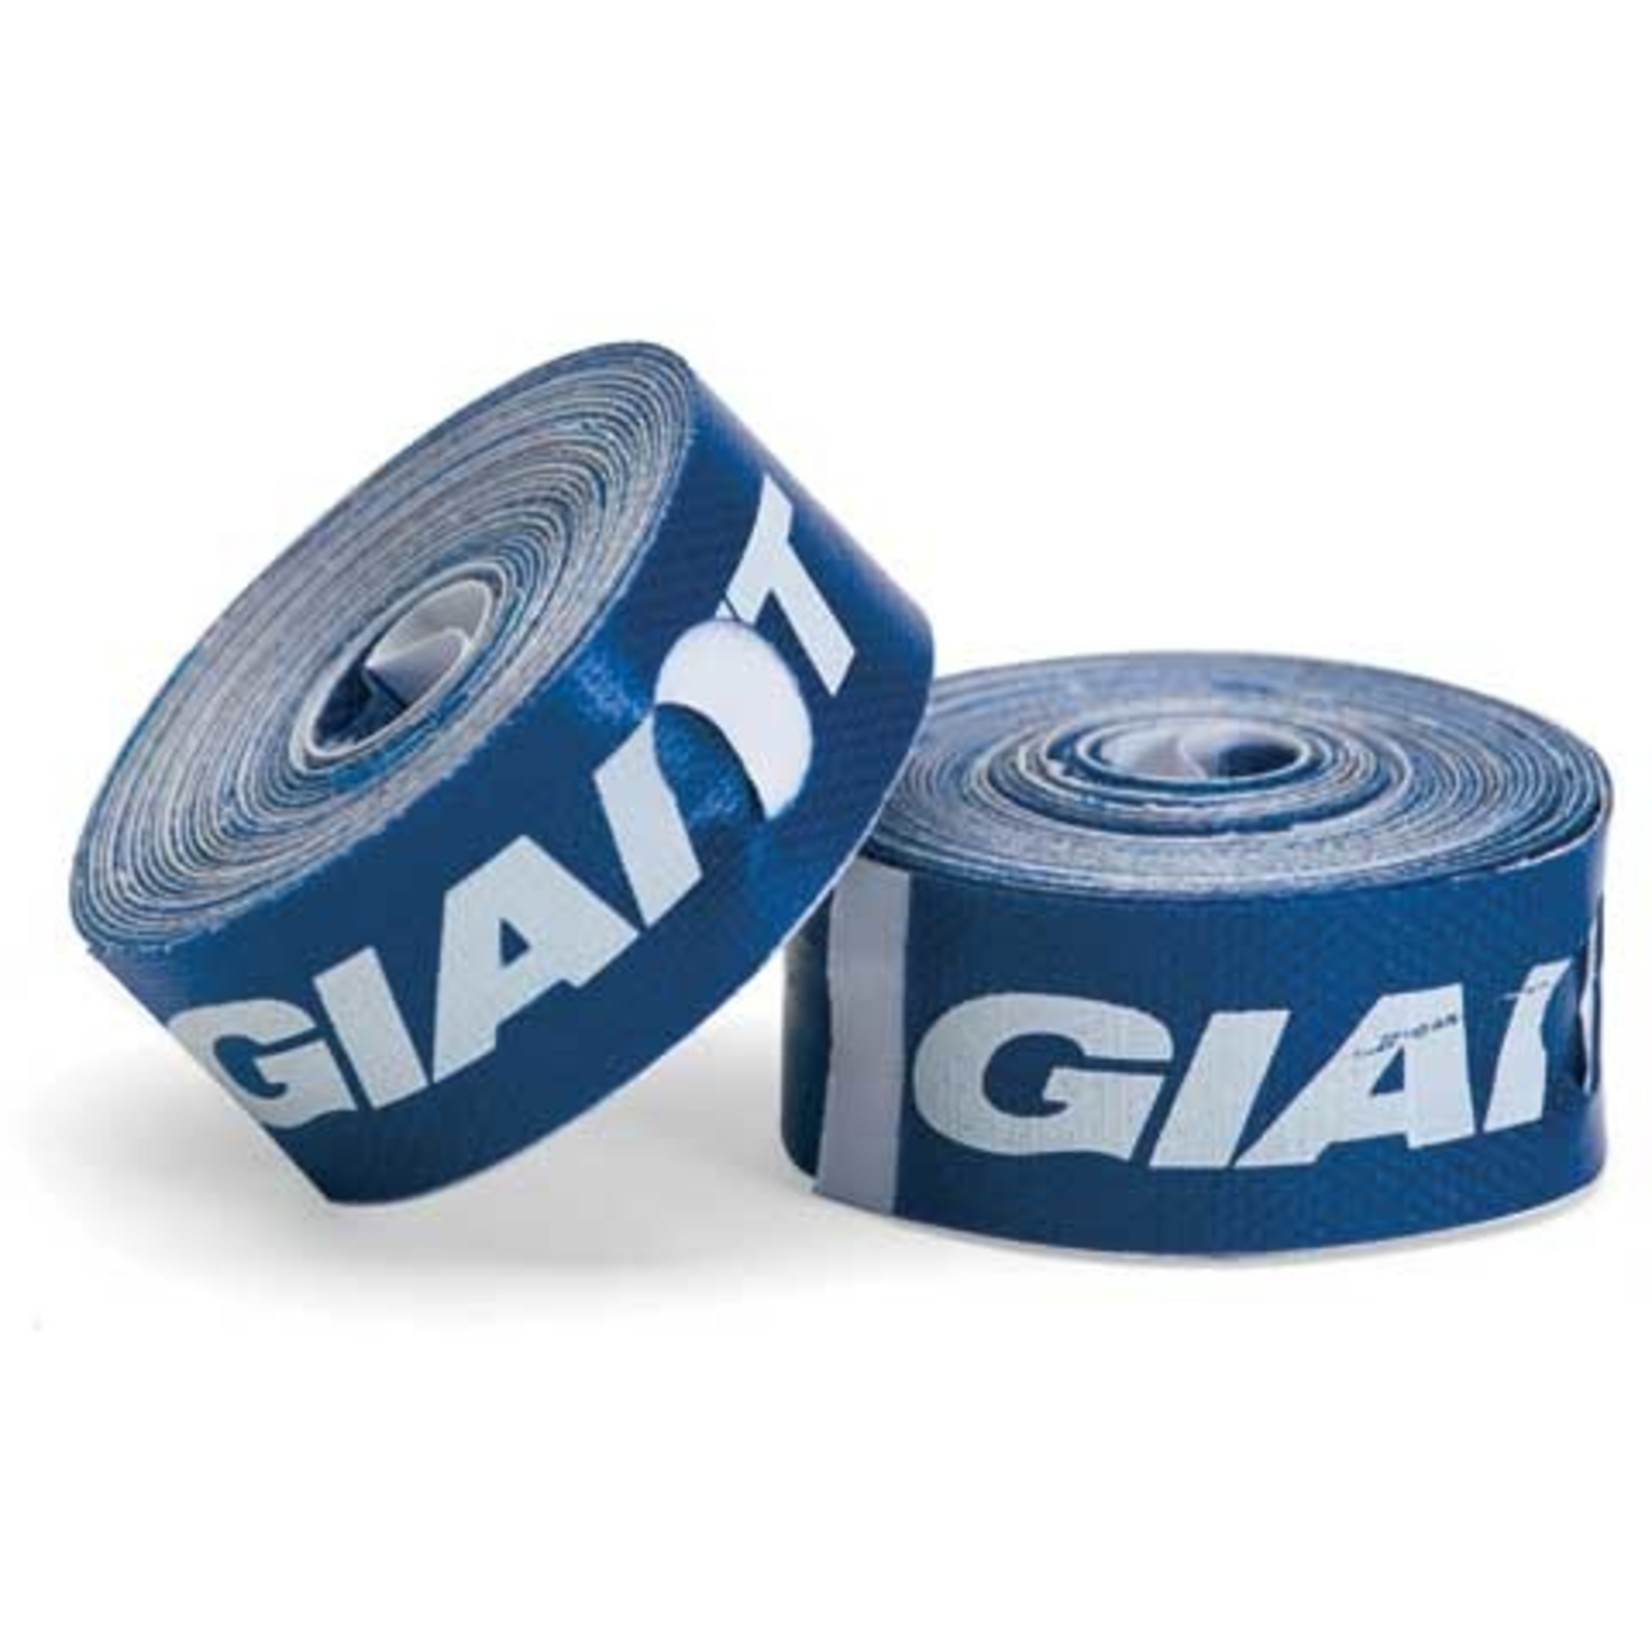 Giant Rim Tape